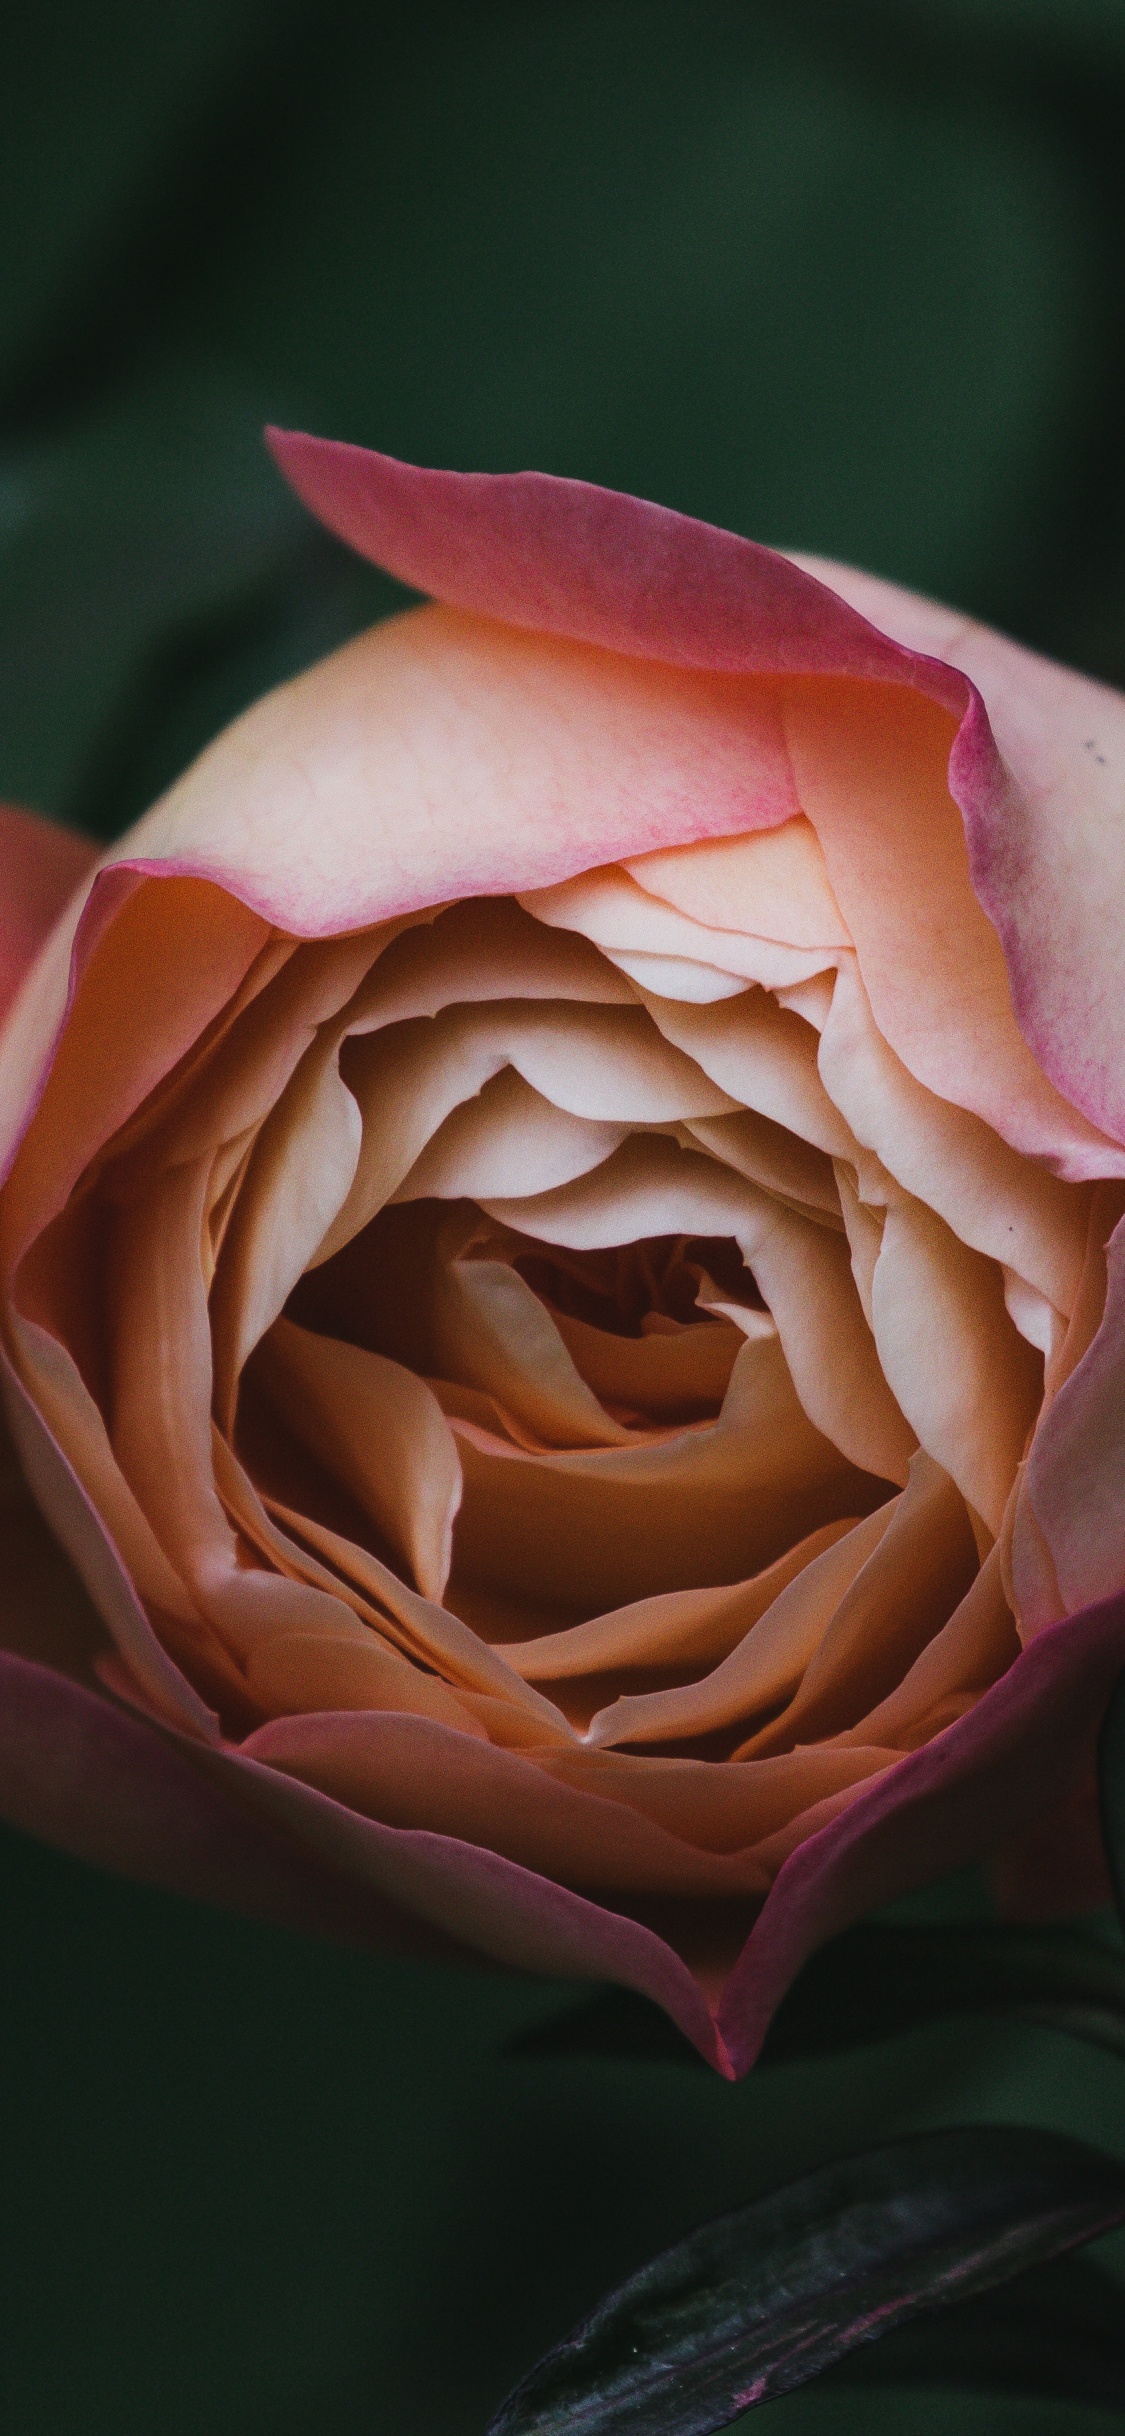 Rose Rose en Fleur Photo en Gros Plan. Wallpaper in 1125x2436 Resolution